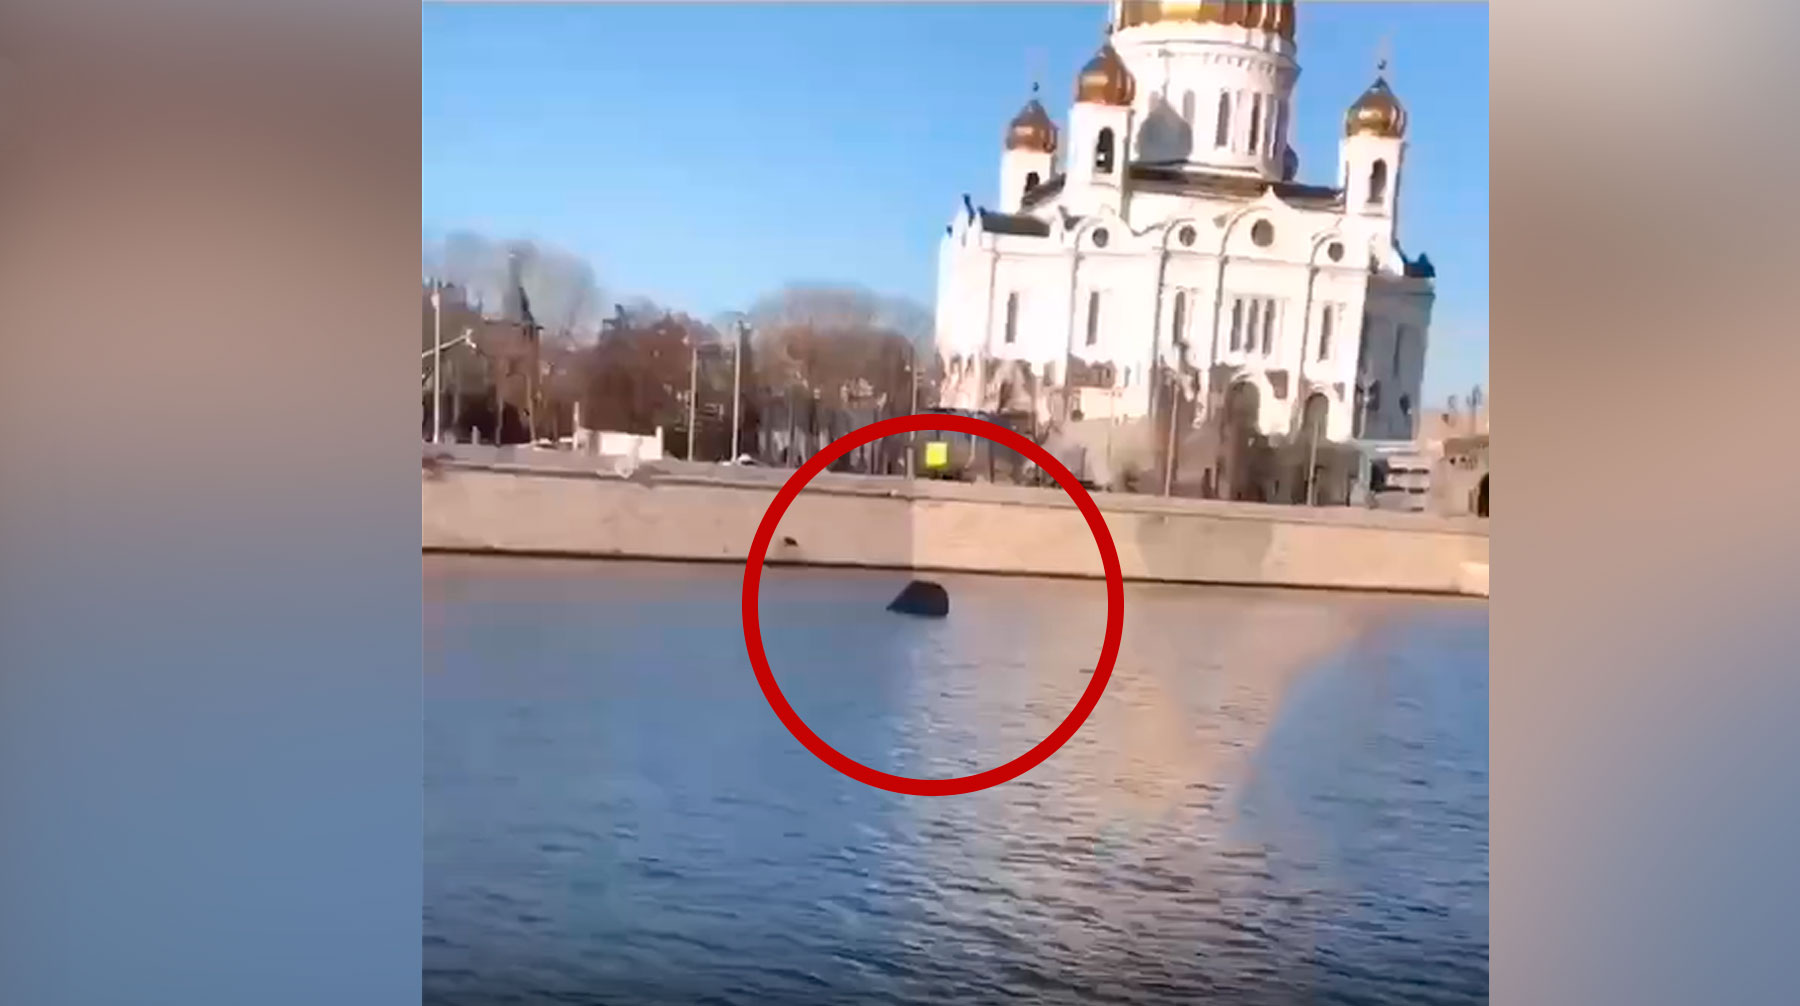 бассейн на месте храма христа спасителя в москве